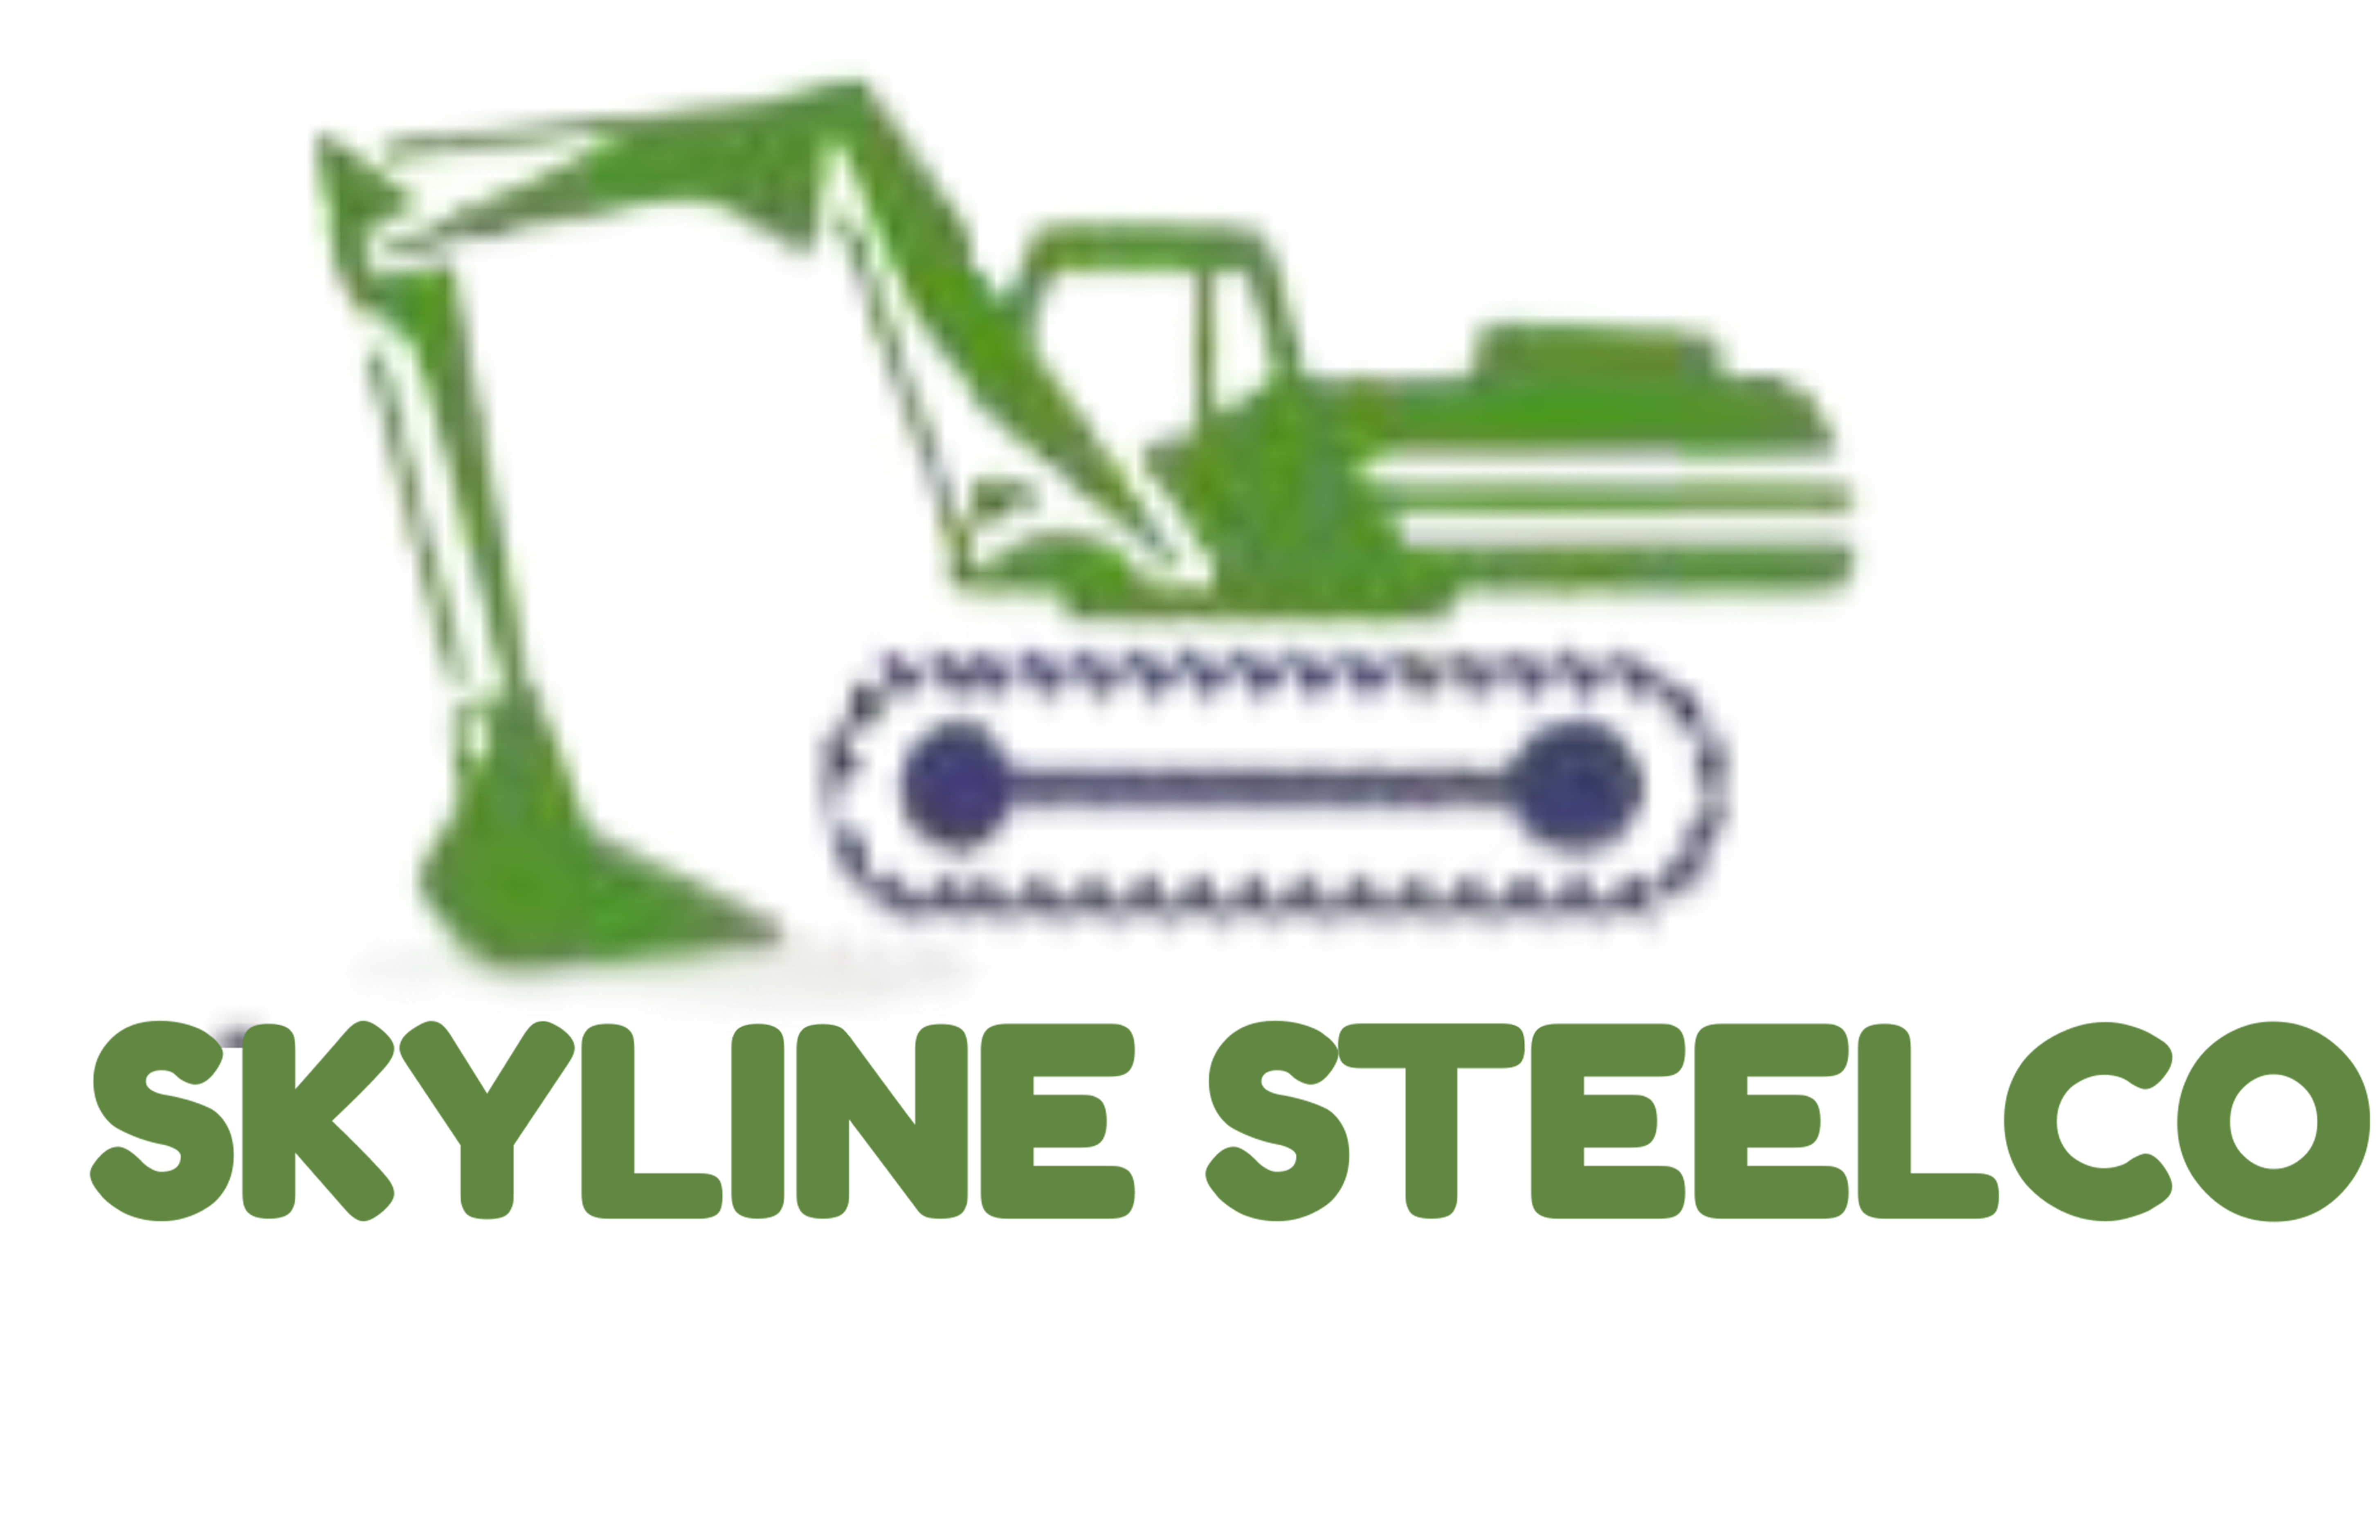 Skyline Steel co